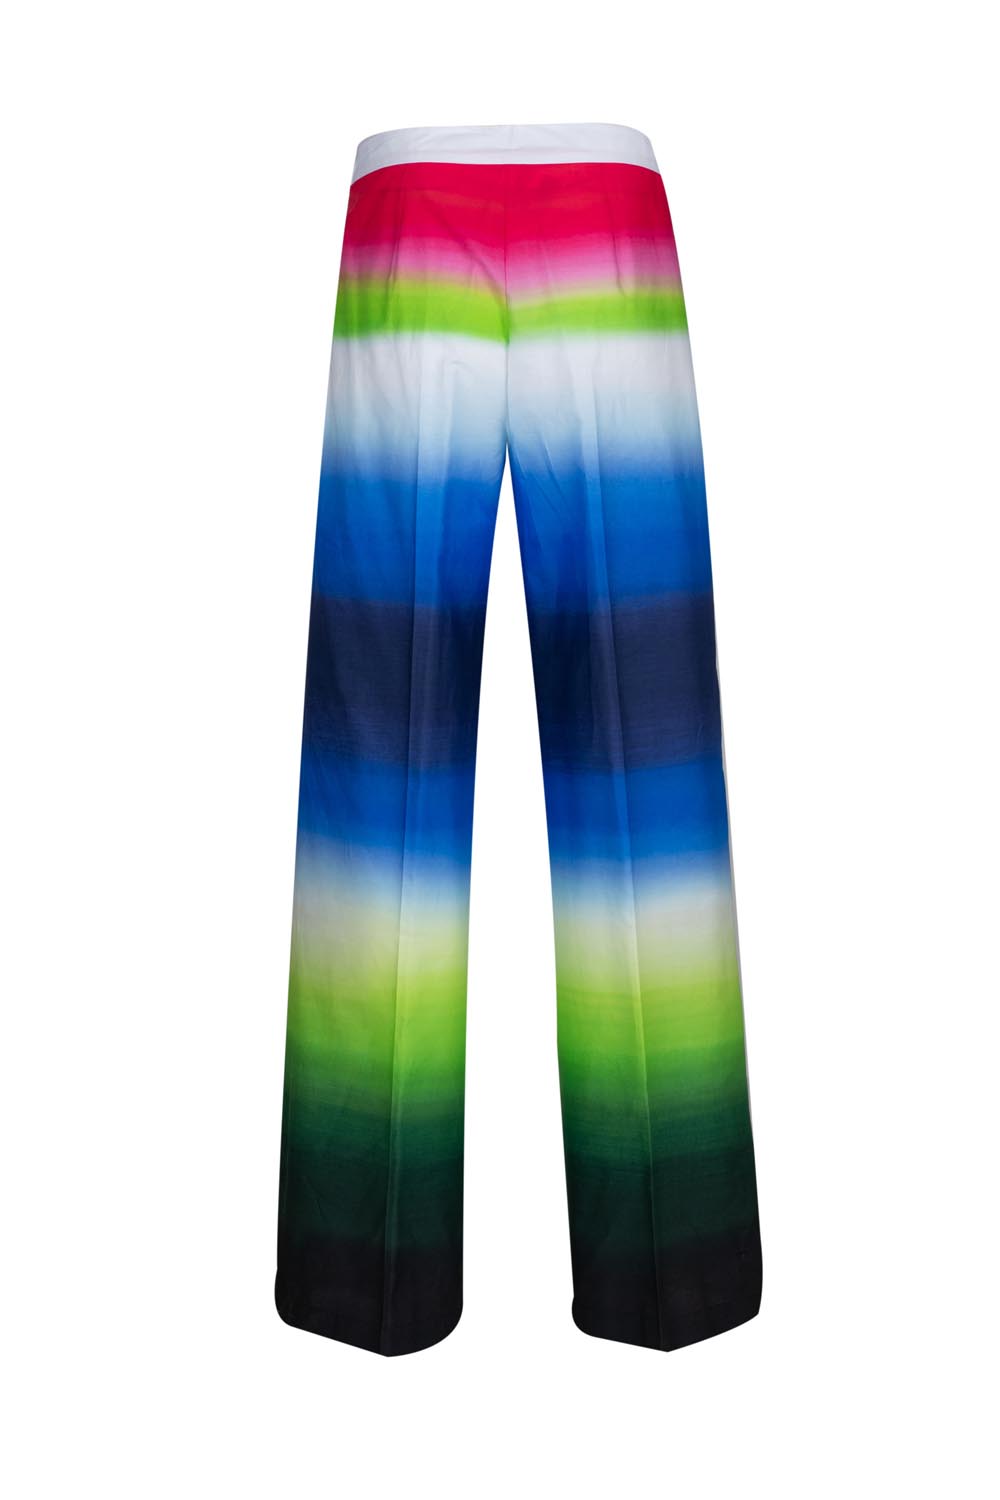 Wide Legged “Rainbow” Trousers